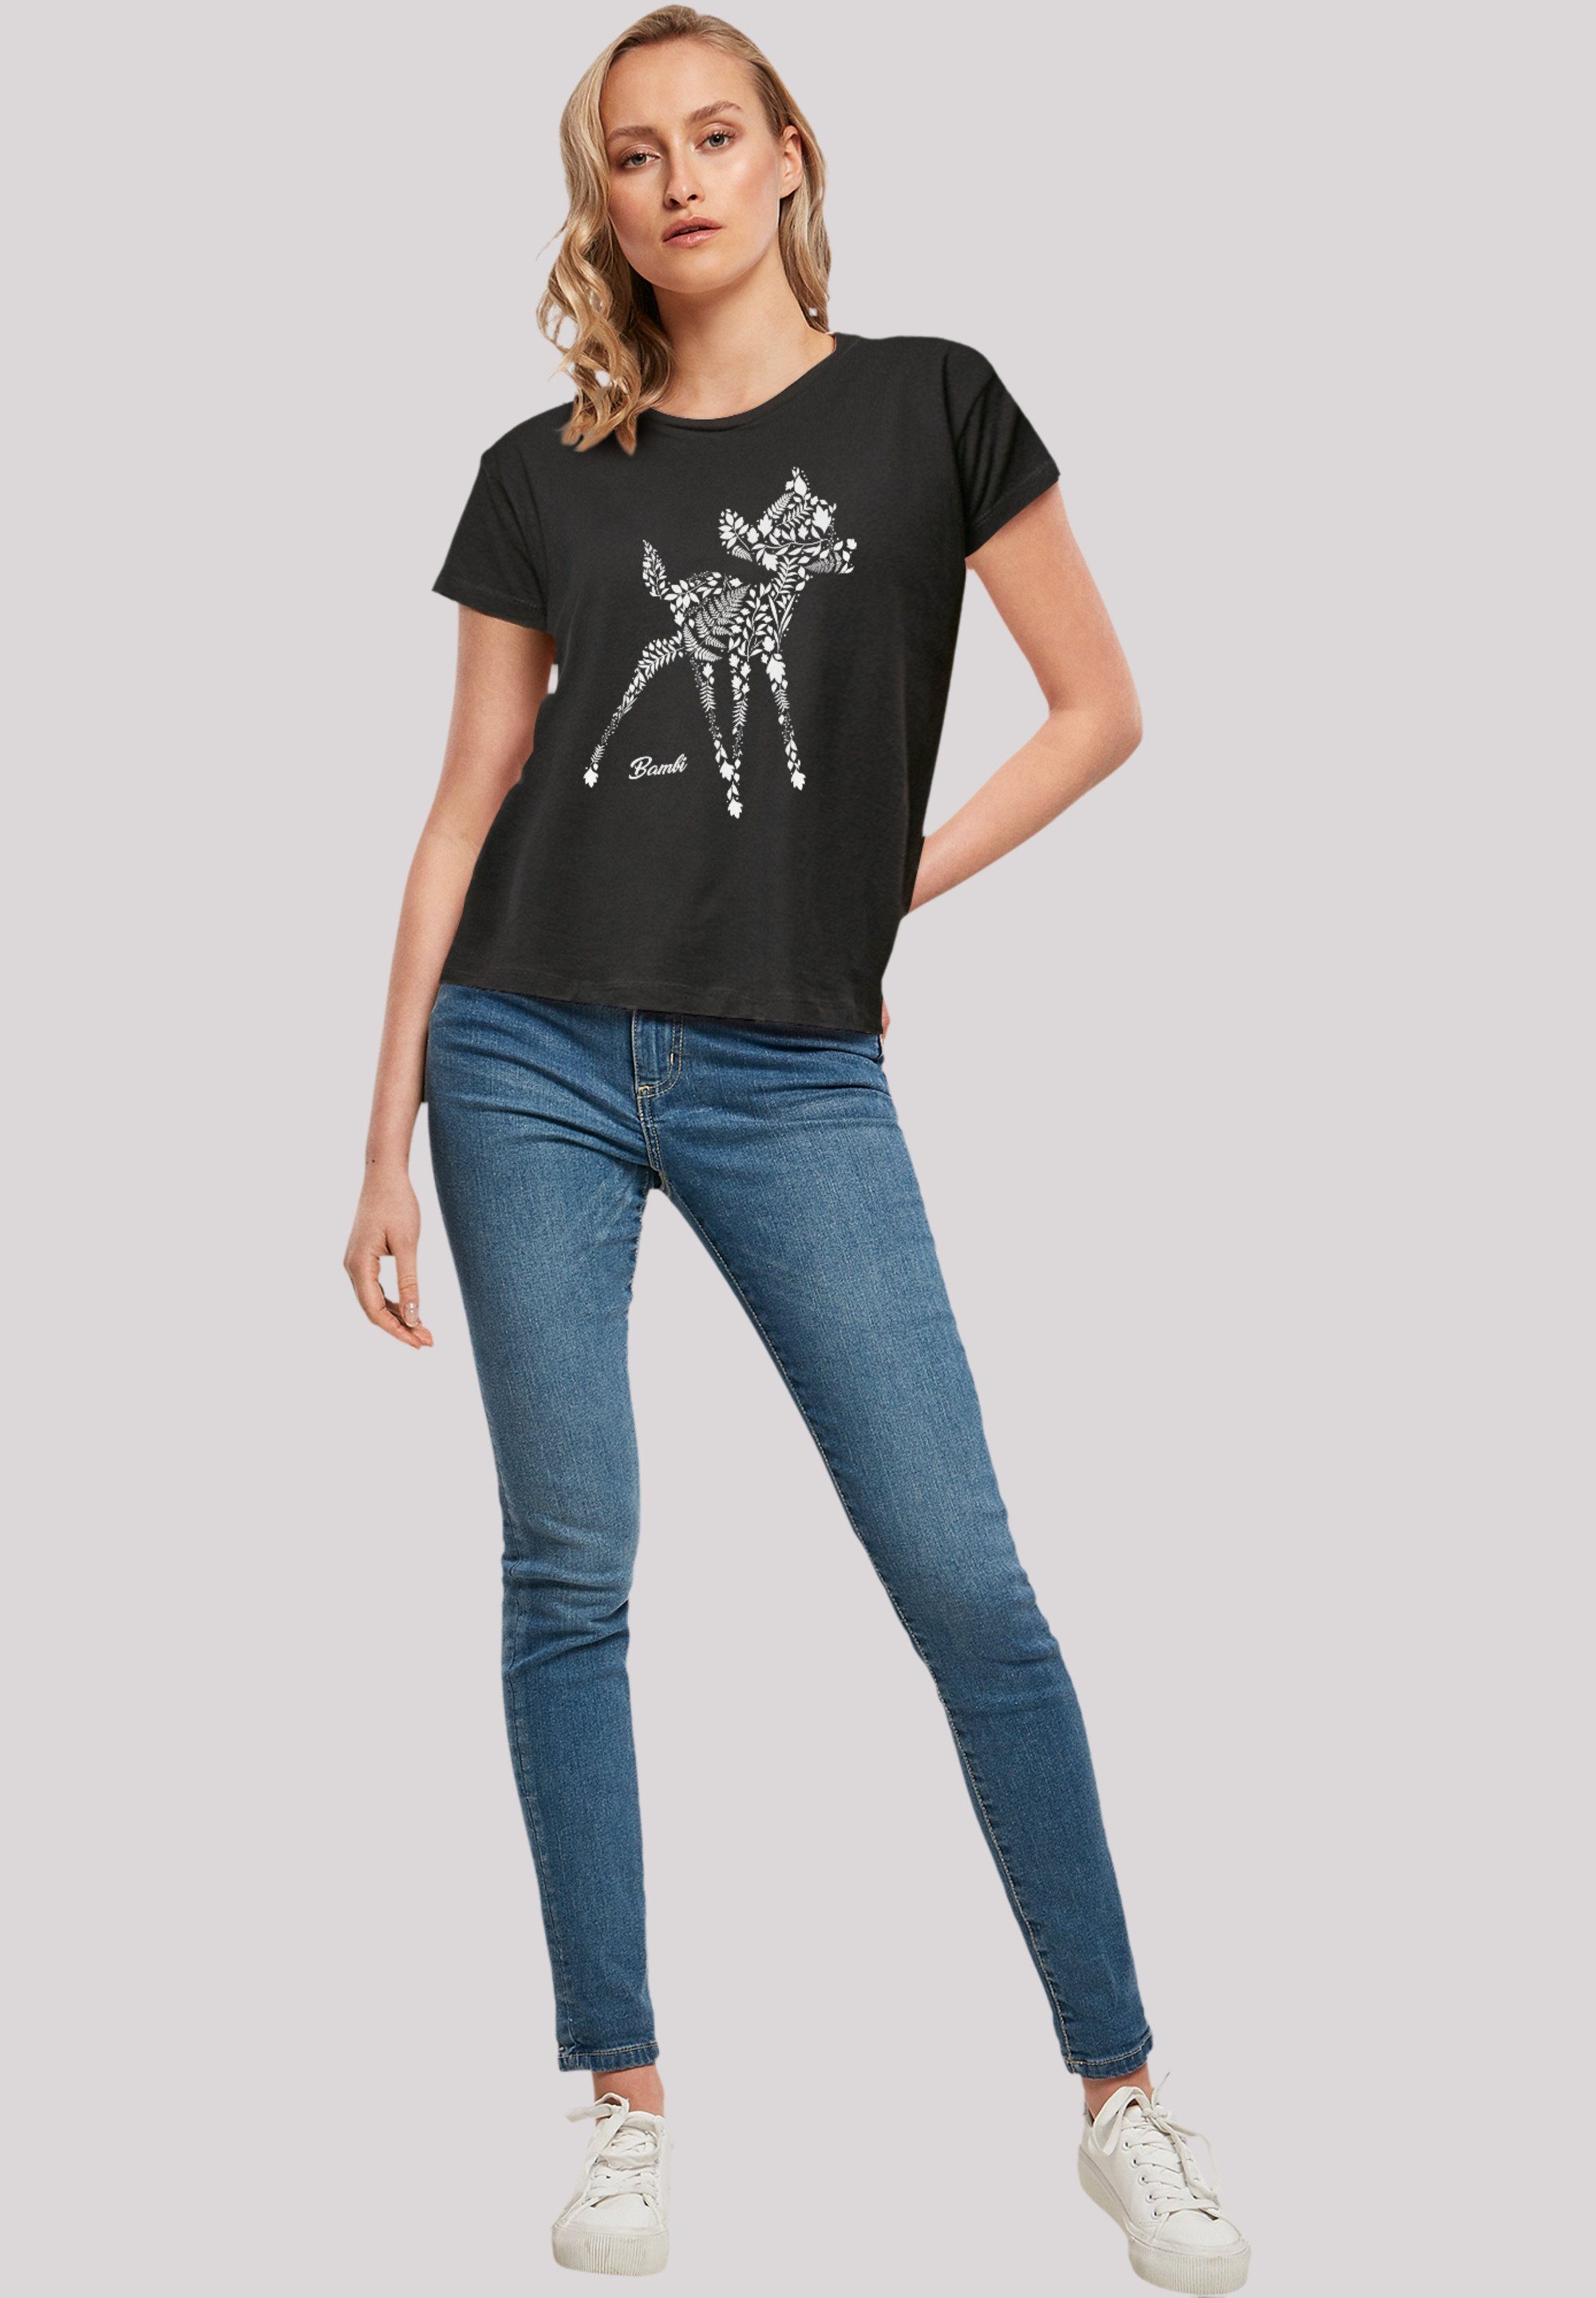 T-Shirt Bambi Botanica Disney Premium F4NT4STIC Qualität